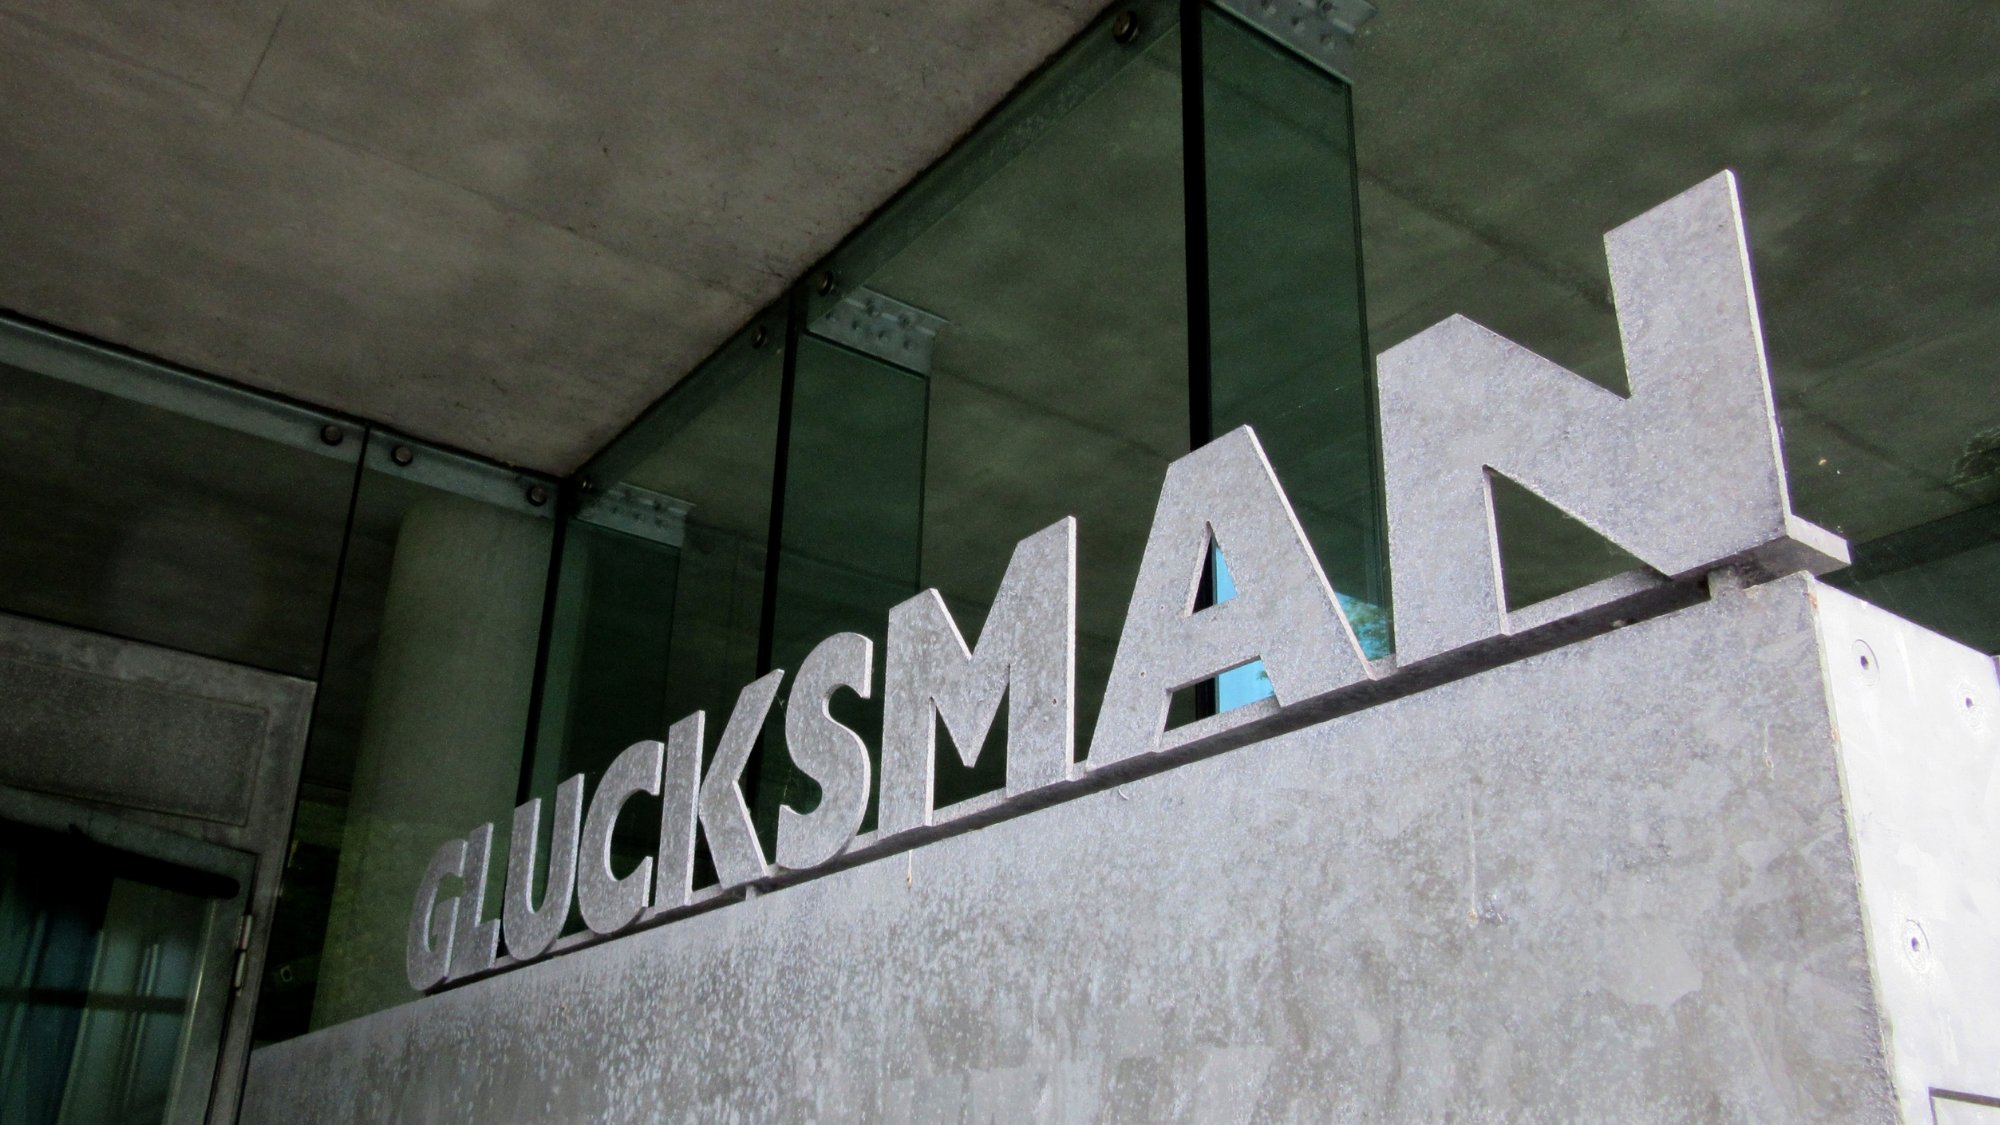 Stone sign saying Glucksman outside the Lewis Glucksman Gallery.